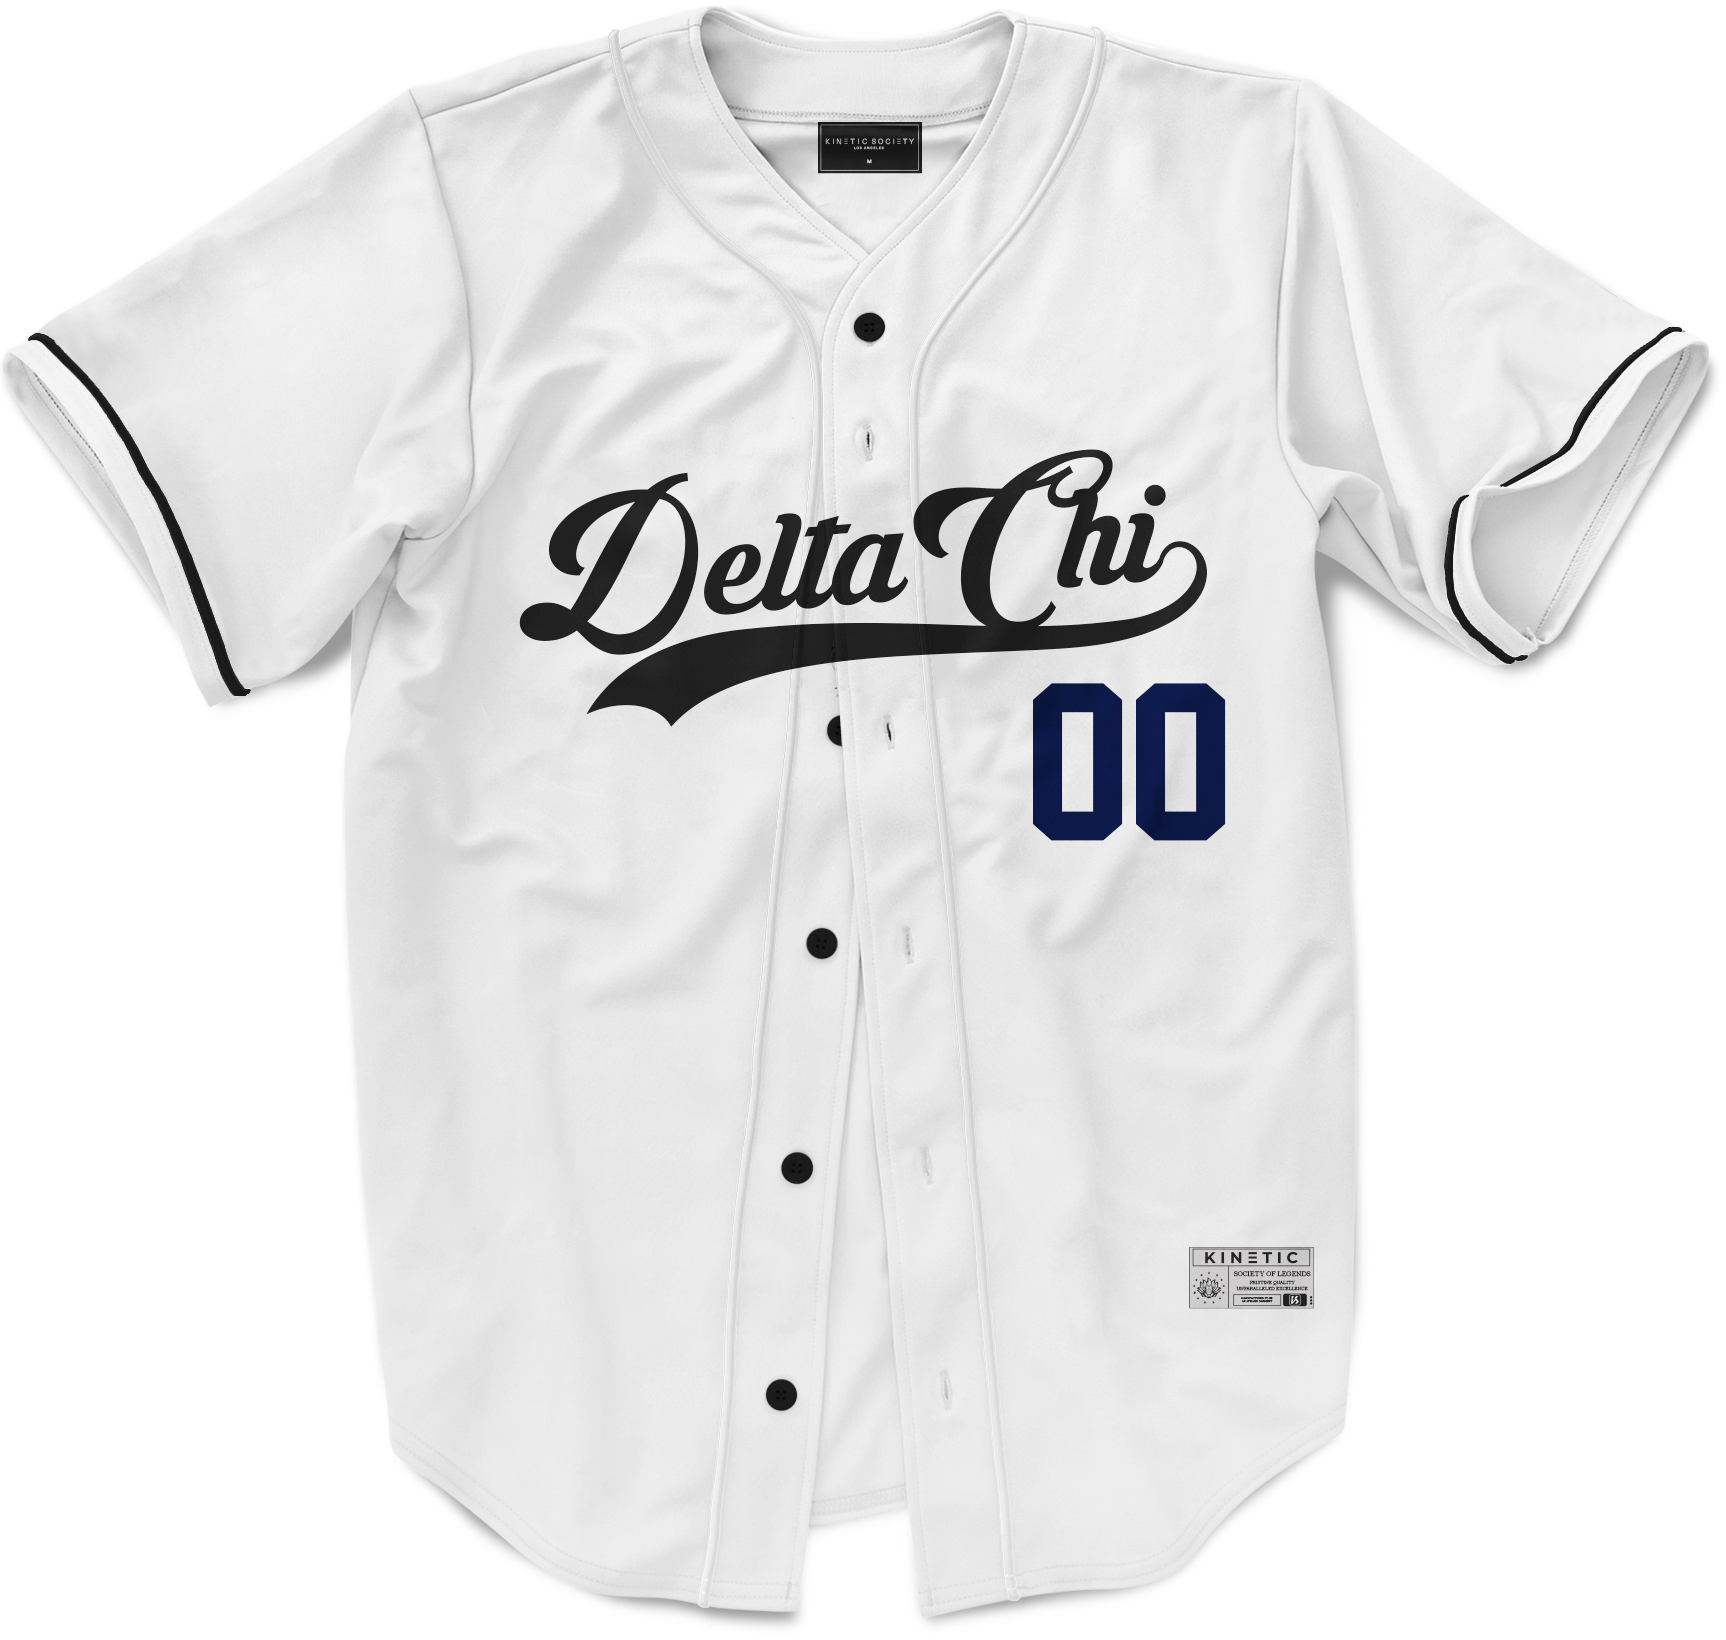 Delta Chi - Classic Ballpark Blue Baseball Jersey